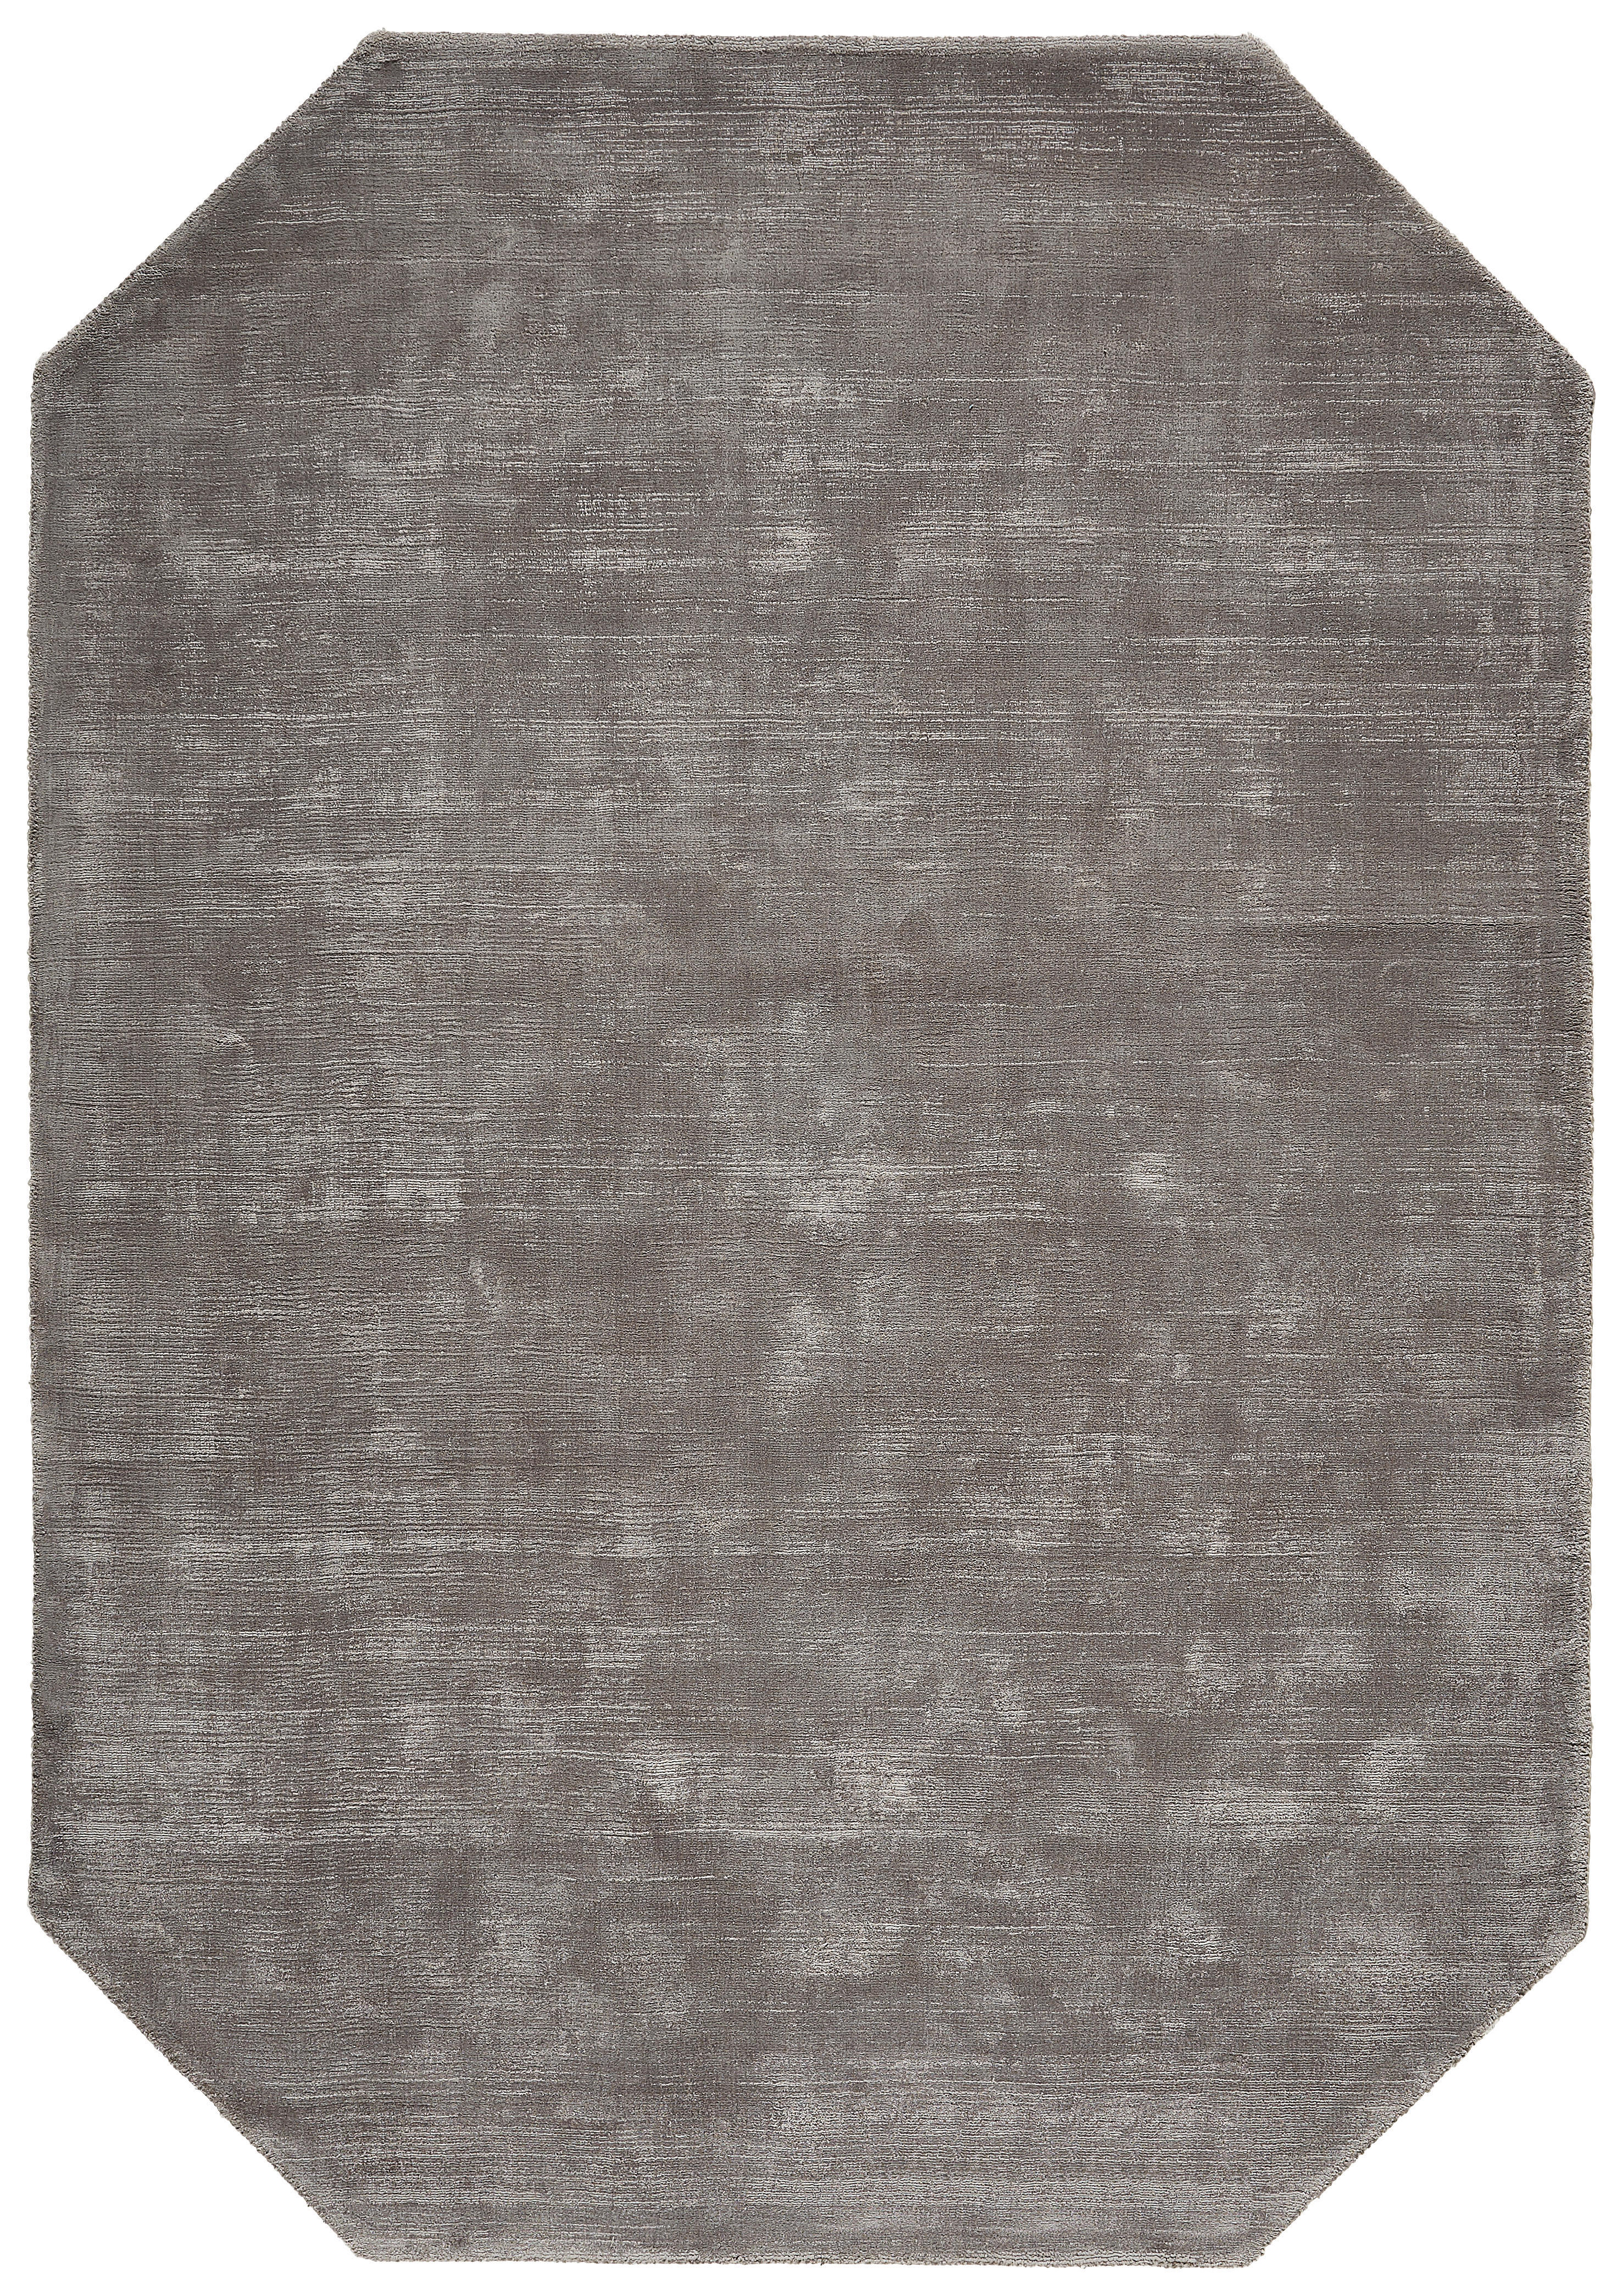 TEPPICH  120/180 cm  Silberfarben   - Silberfarben, Design, Textil (120/180cm) - Novel